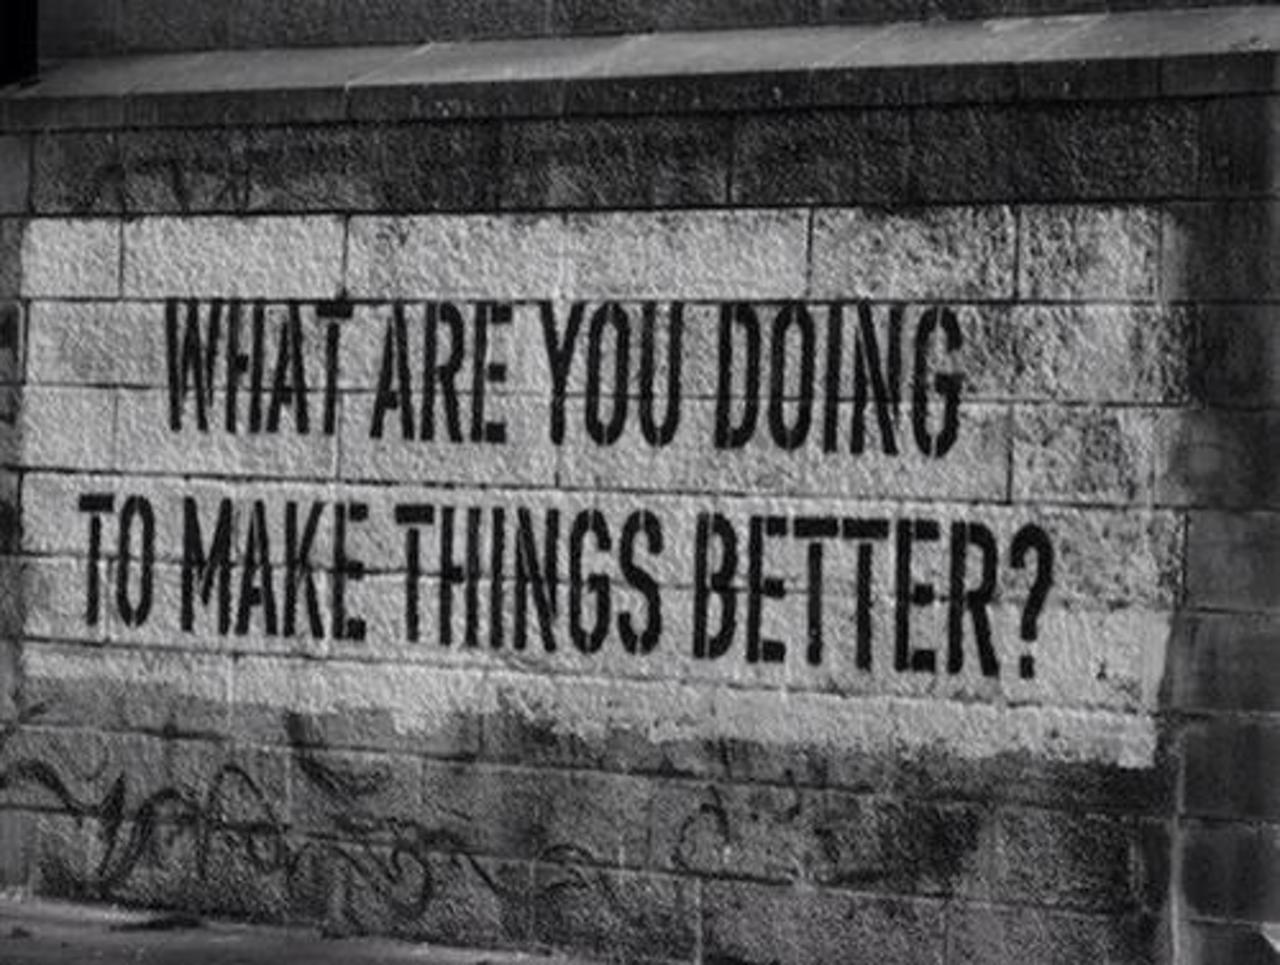 Good question!

"@GoogleStreetArt: What are you doing?

#art #mural #arte #graffiti #streetart http://t.co/NQSznyaWBc"